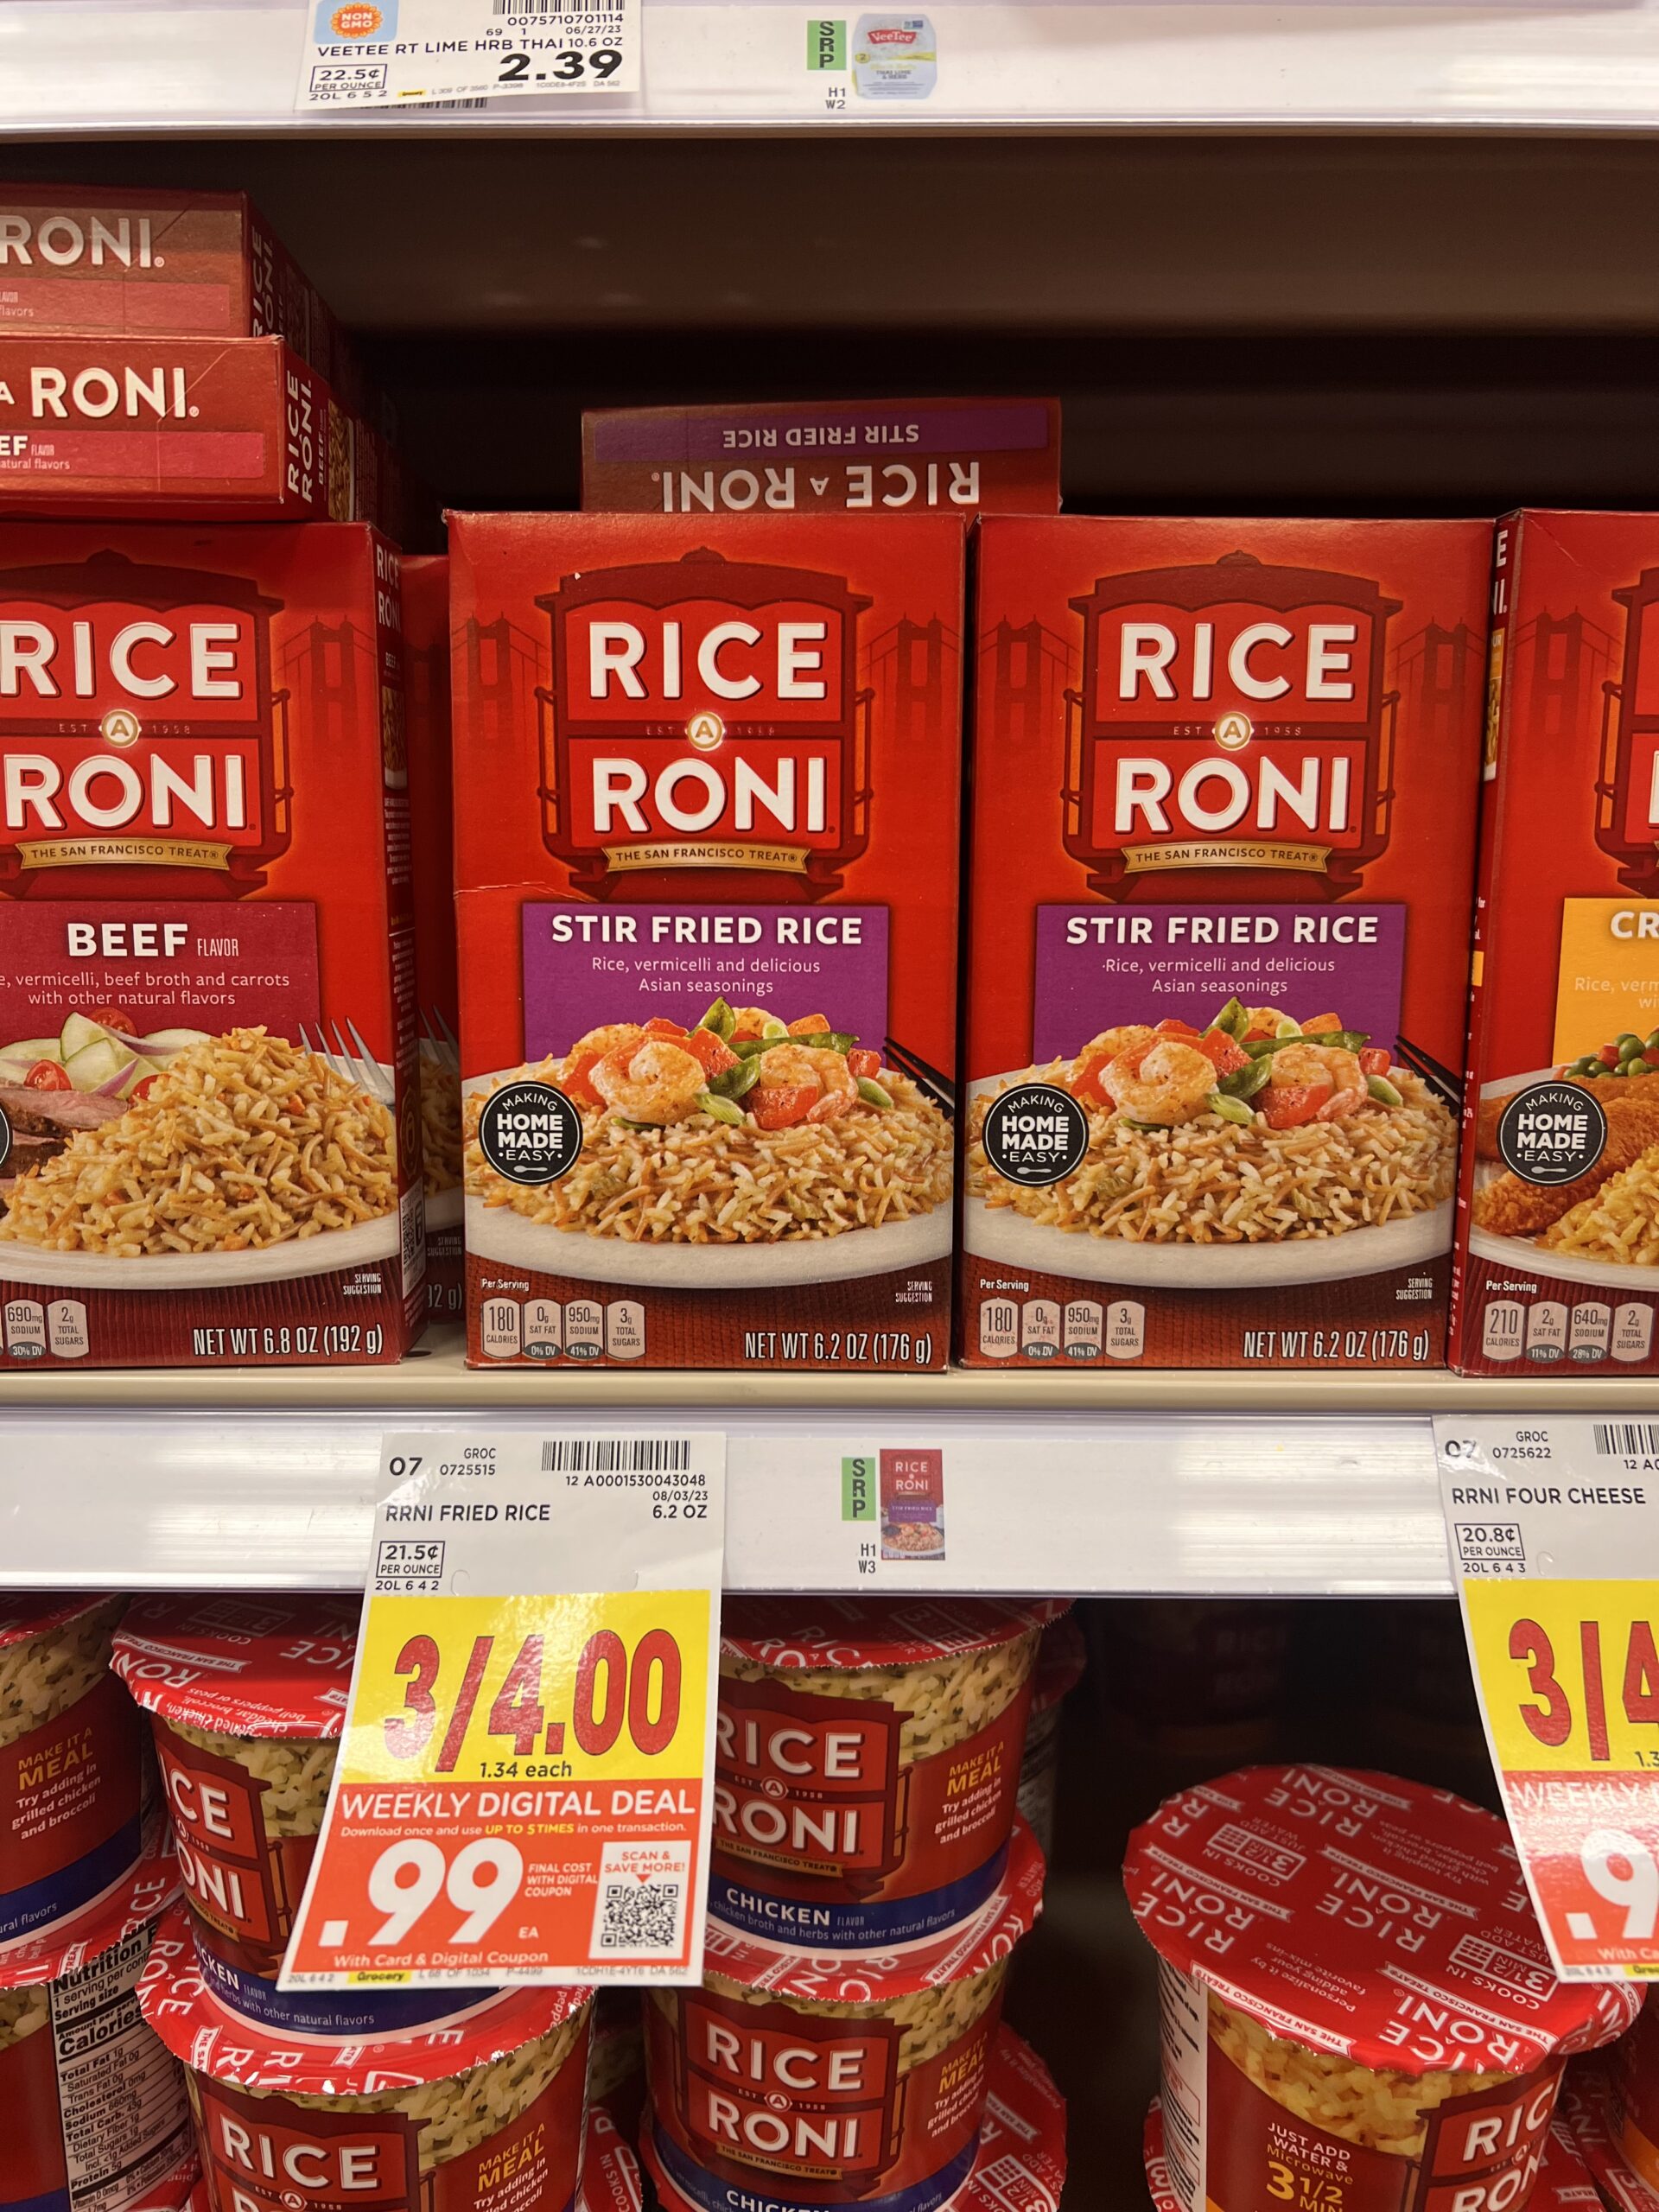 rice a roni kroger shelf image 8